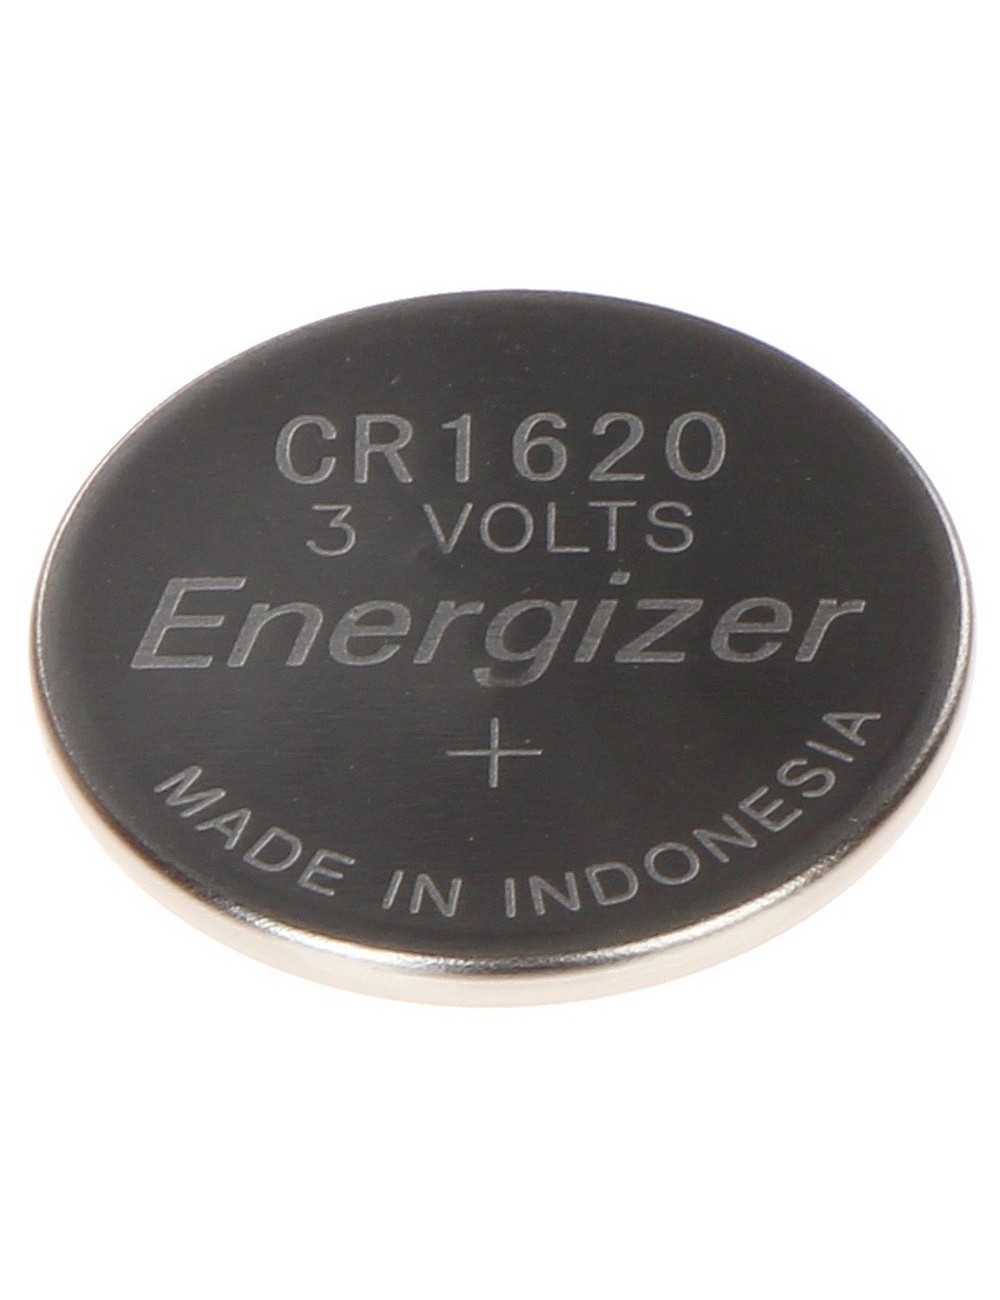 Lithium knoopcel CR1620 3V 79mAh (Energizer)